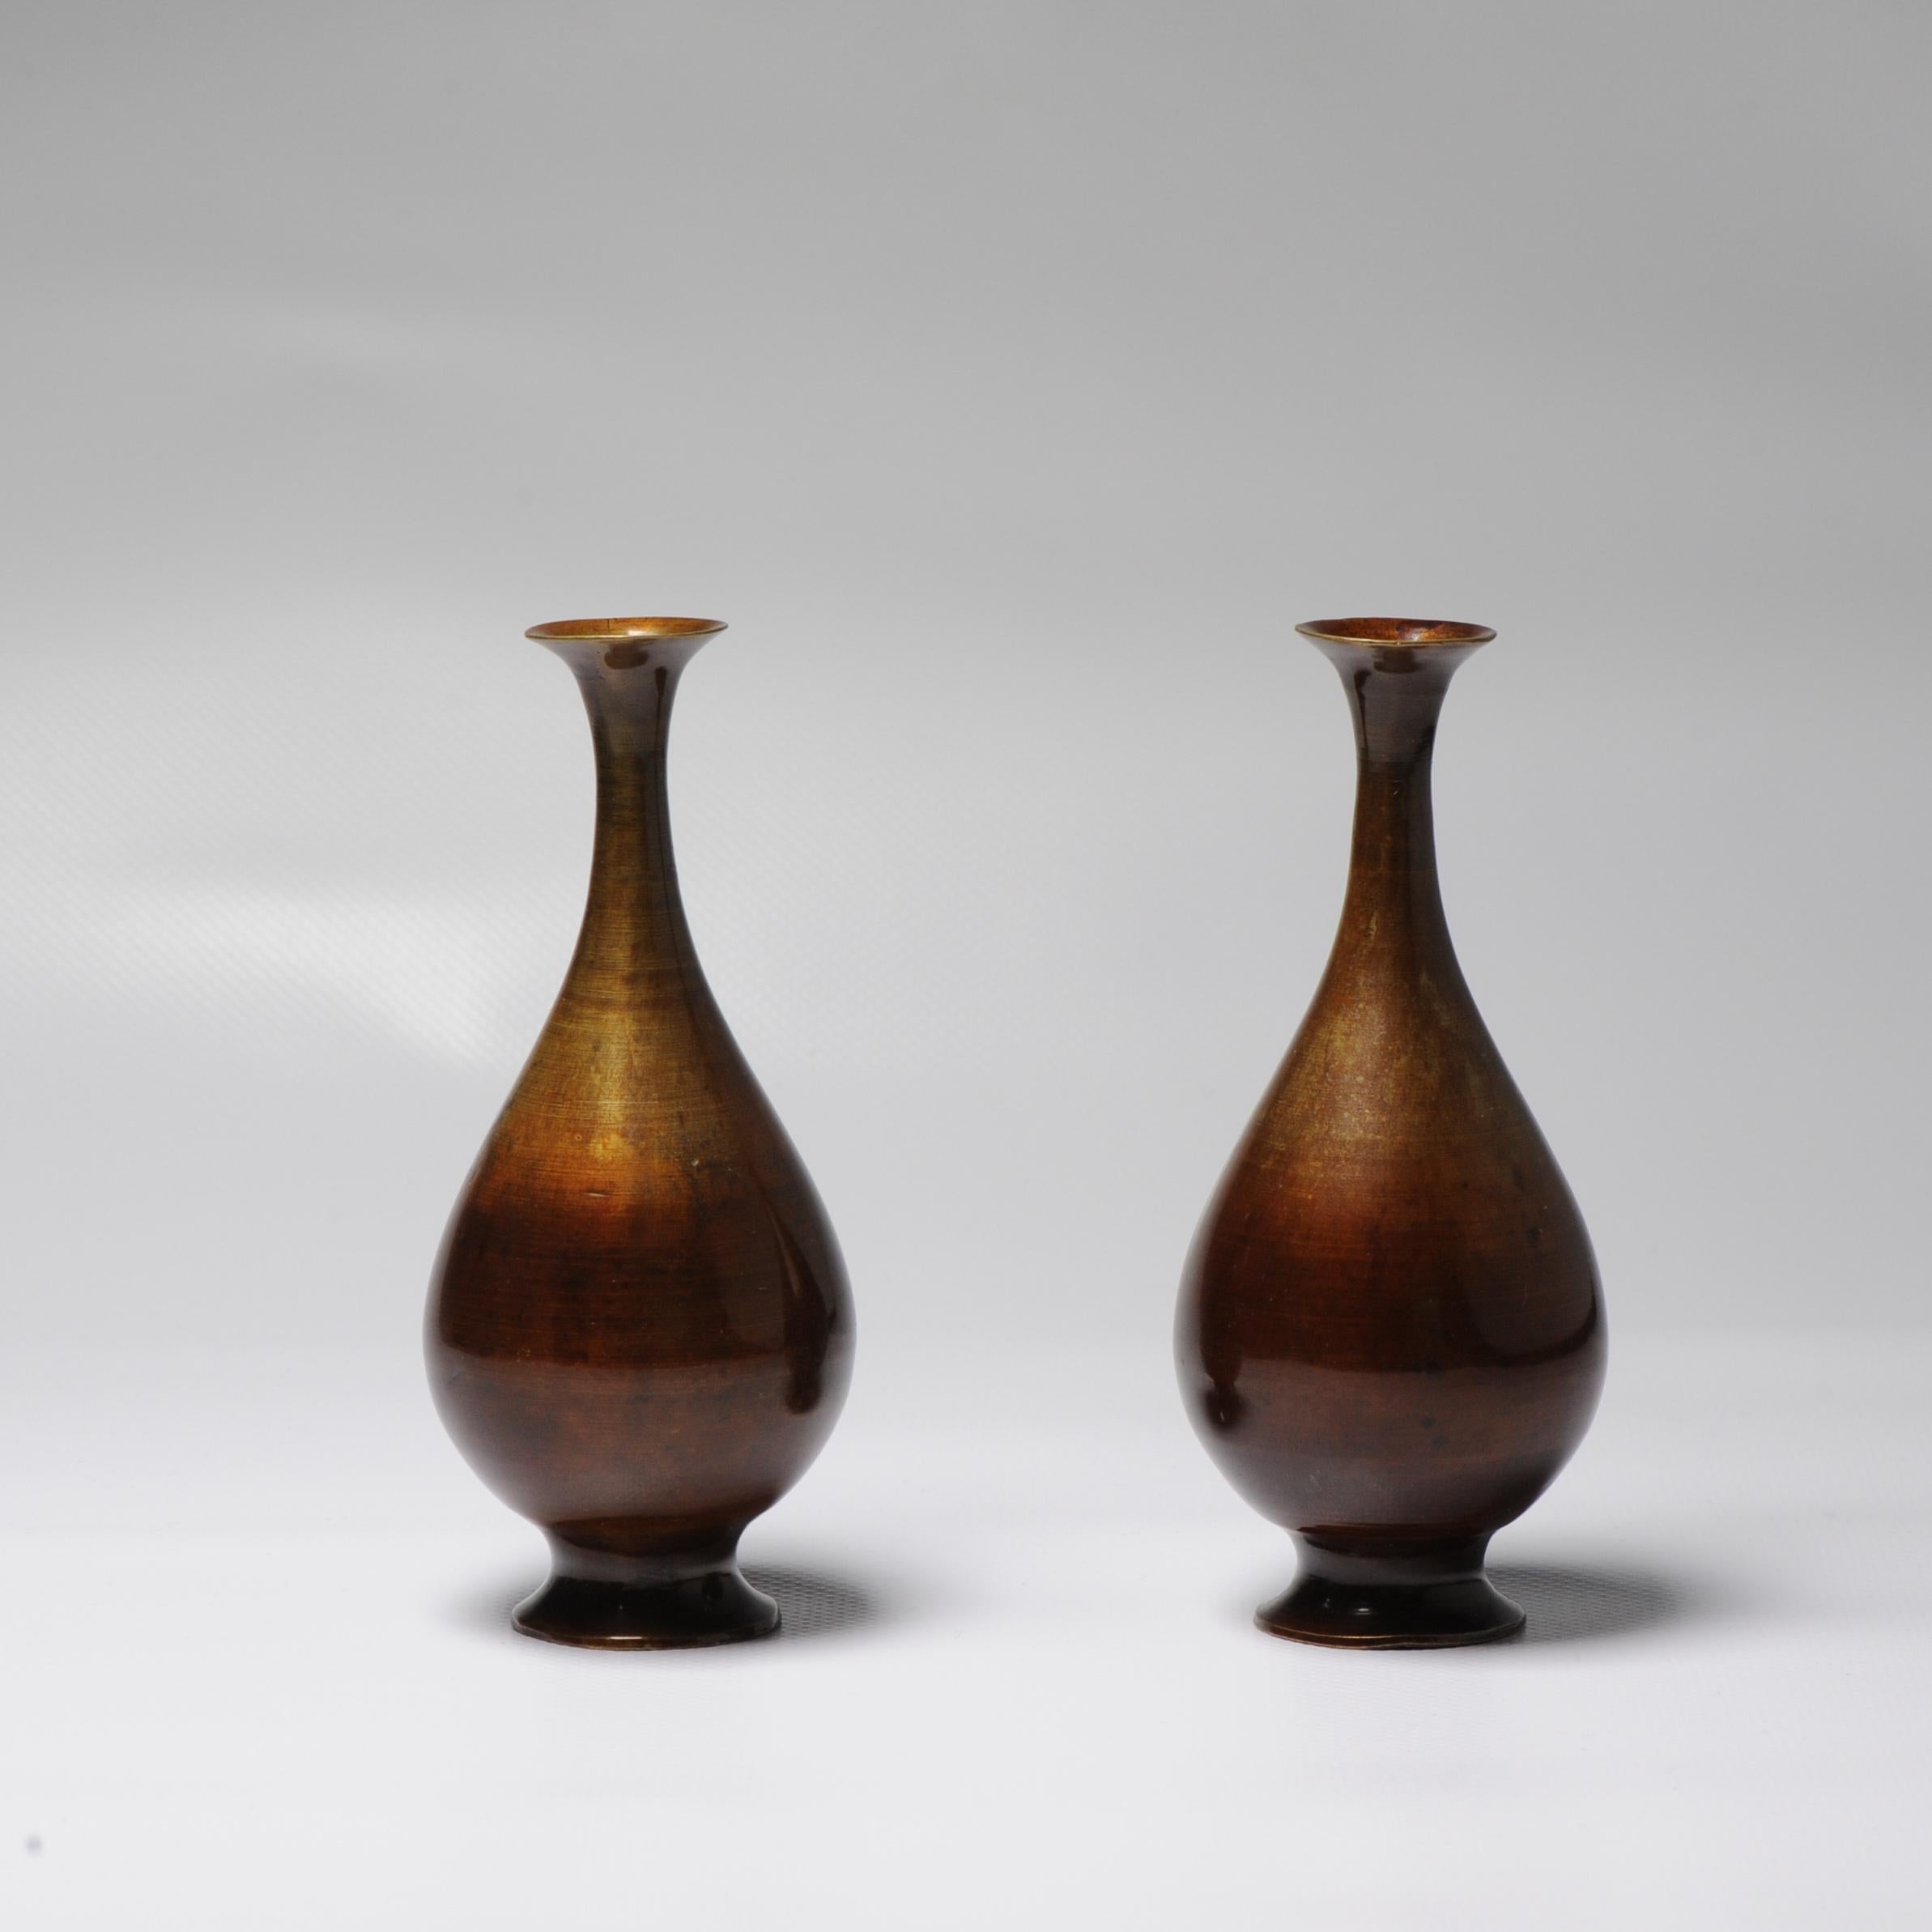 Antique Bronze Meiji Vase with Cranes 19th Century Japan, Japanese For Sale 2